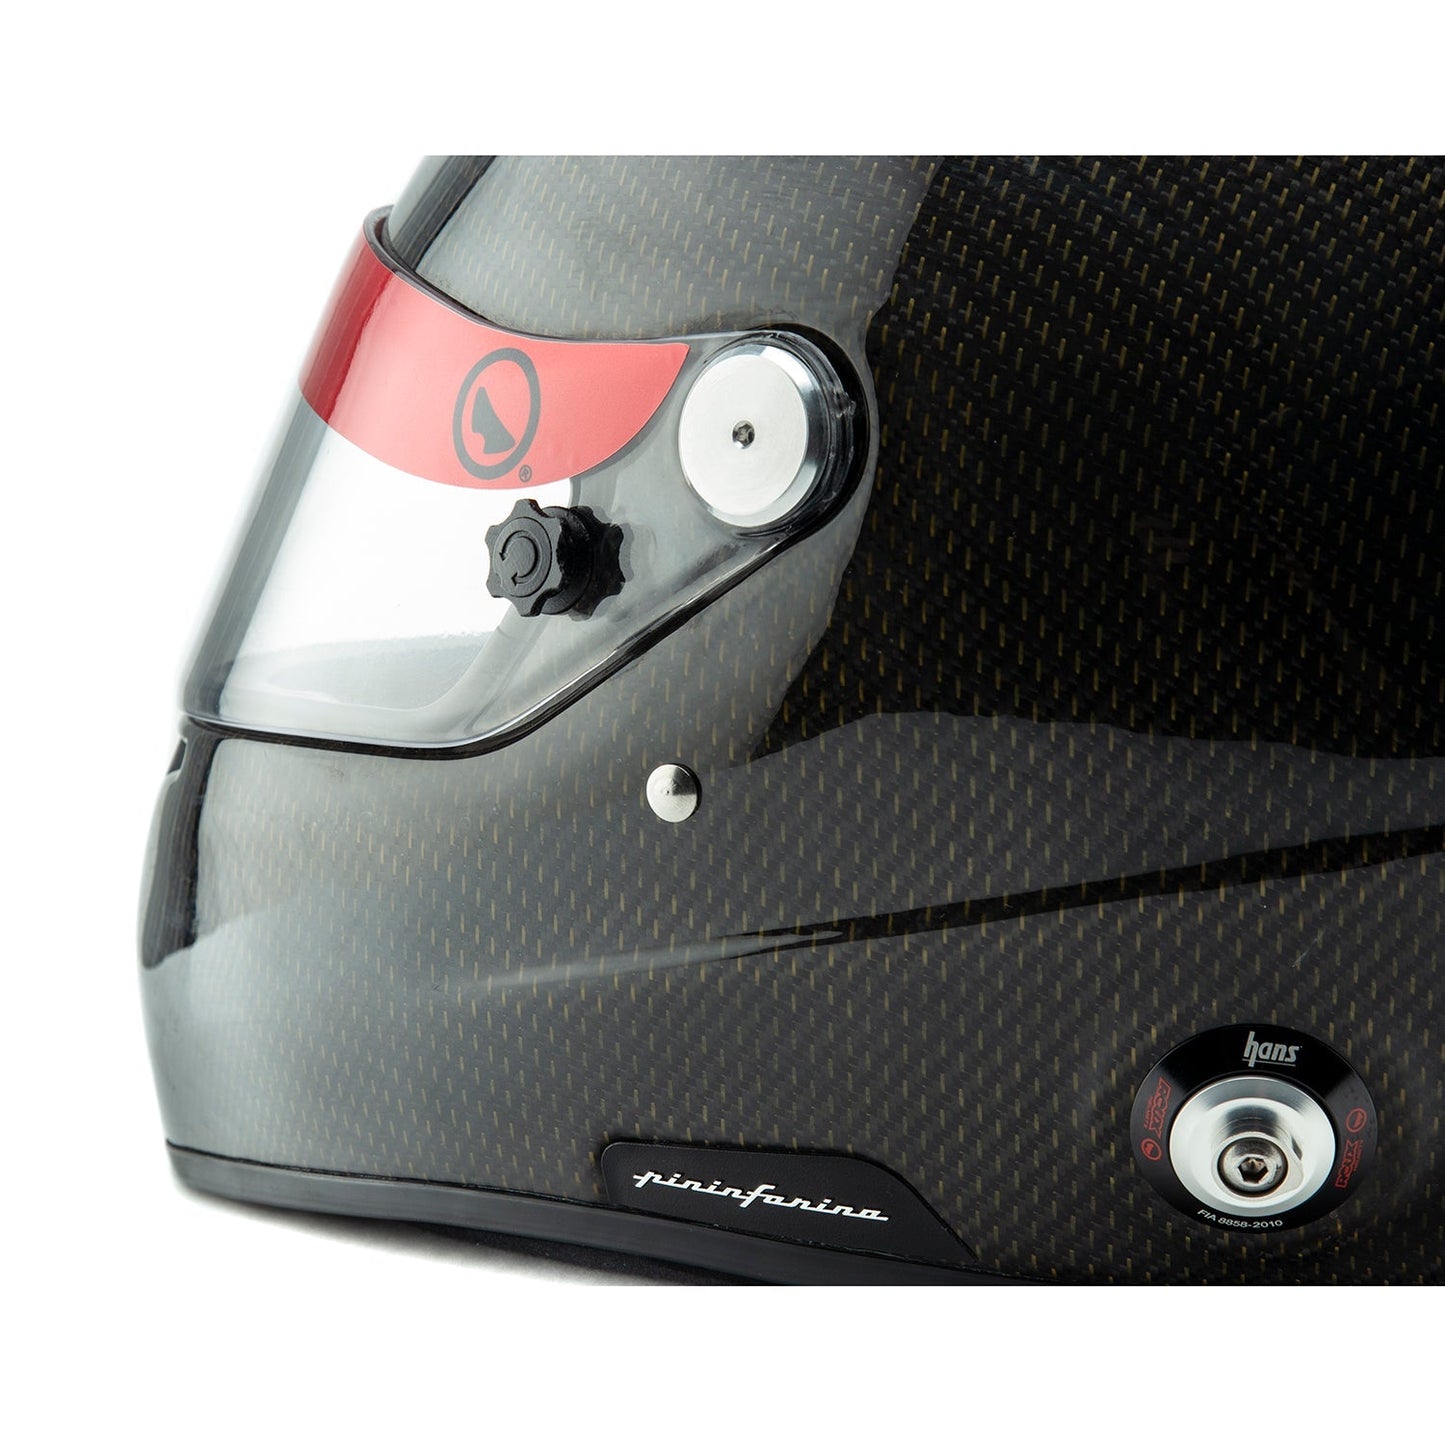 Roux Pininfarina Carbon Formula SA2020 Helmet